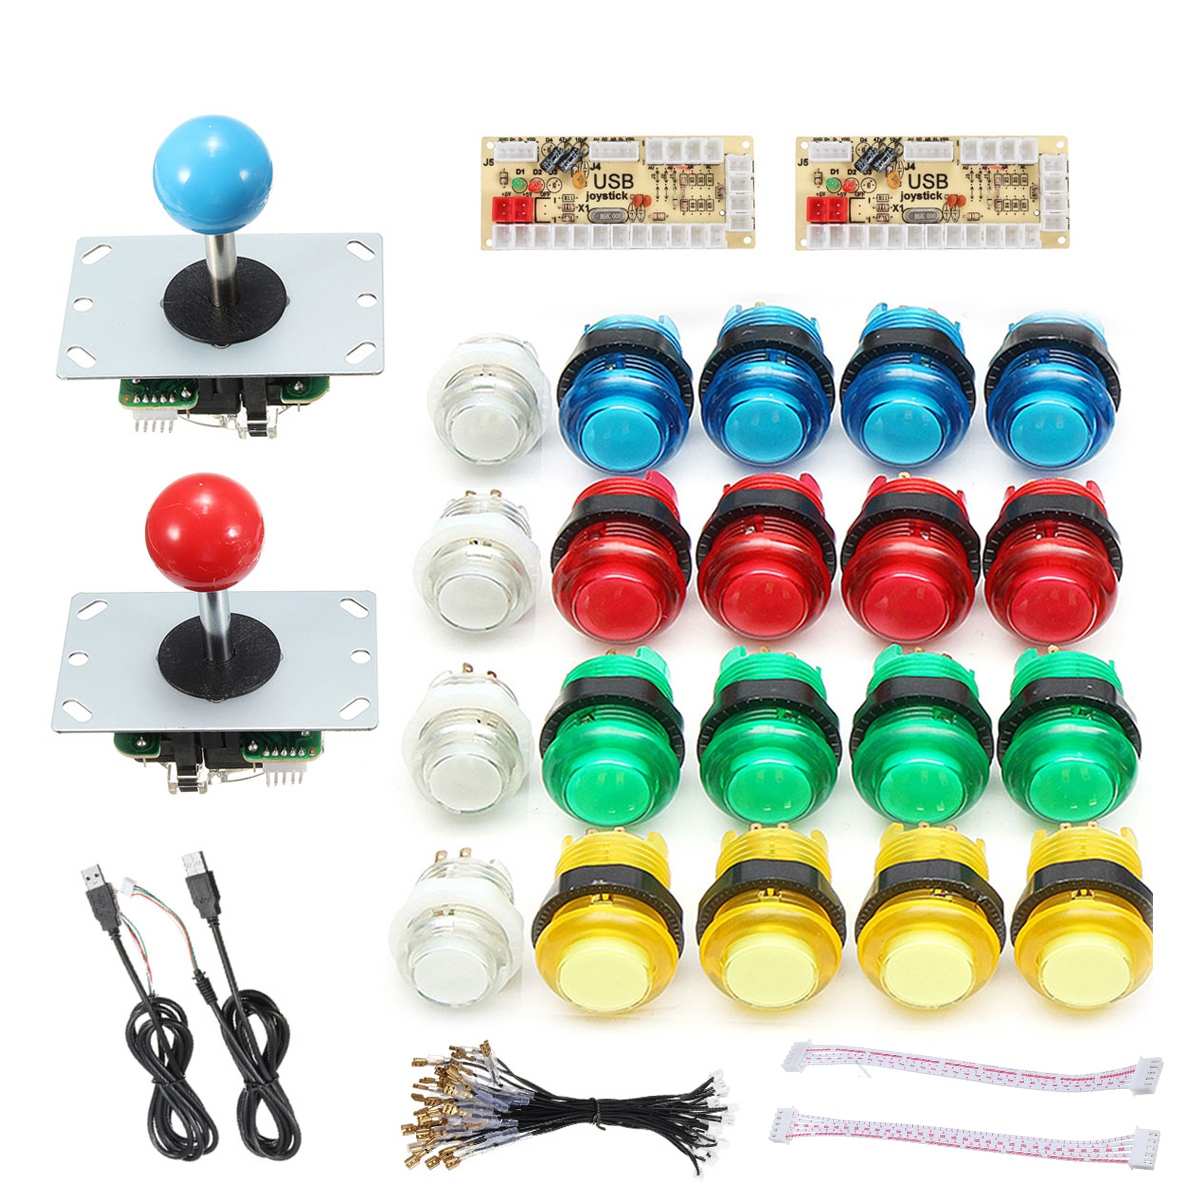 DIY Joystick Arcade Kits 2 Players With 20 LED Arcade Buttons + 2 Joysticks + 2 USB Encoder Kit + Cables Arcade Game Parts Set: 2